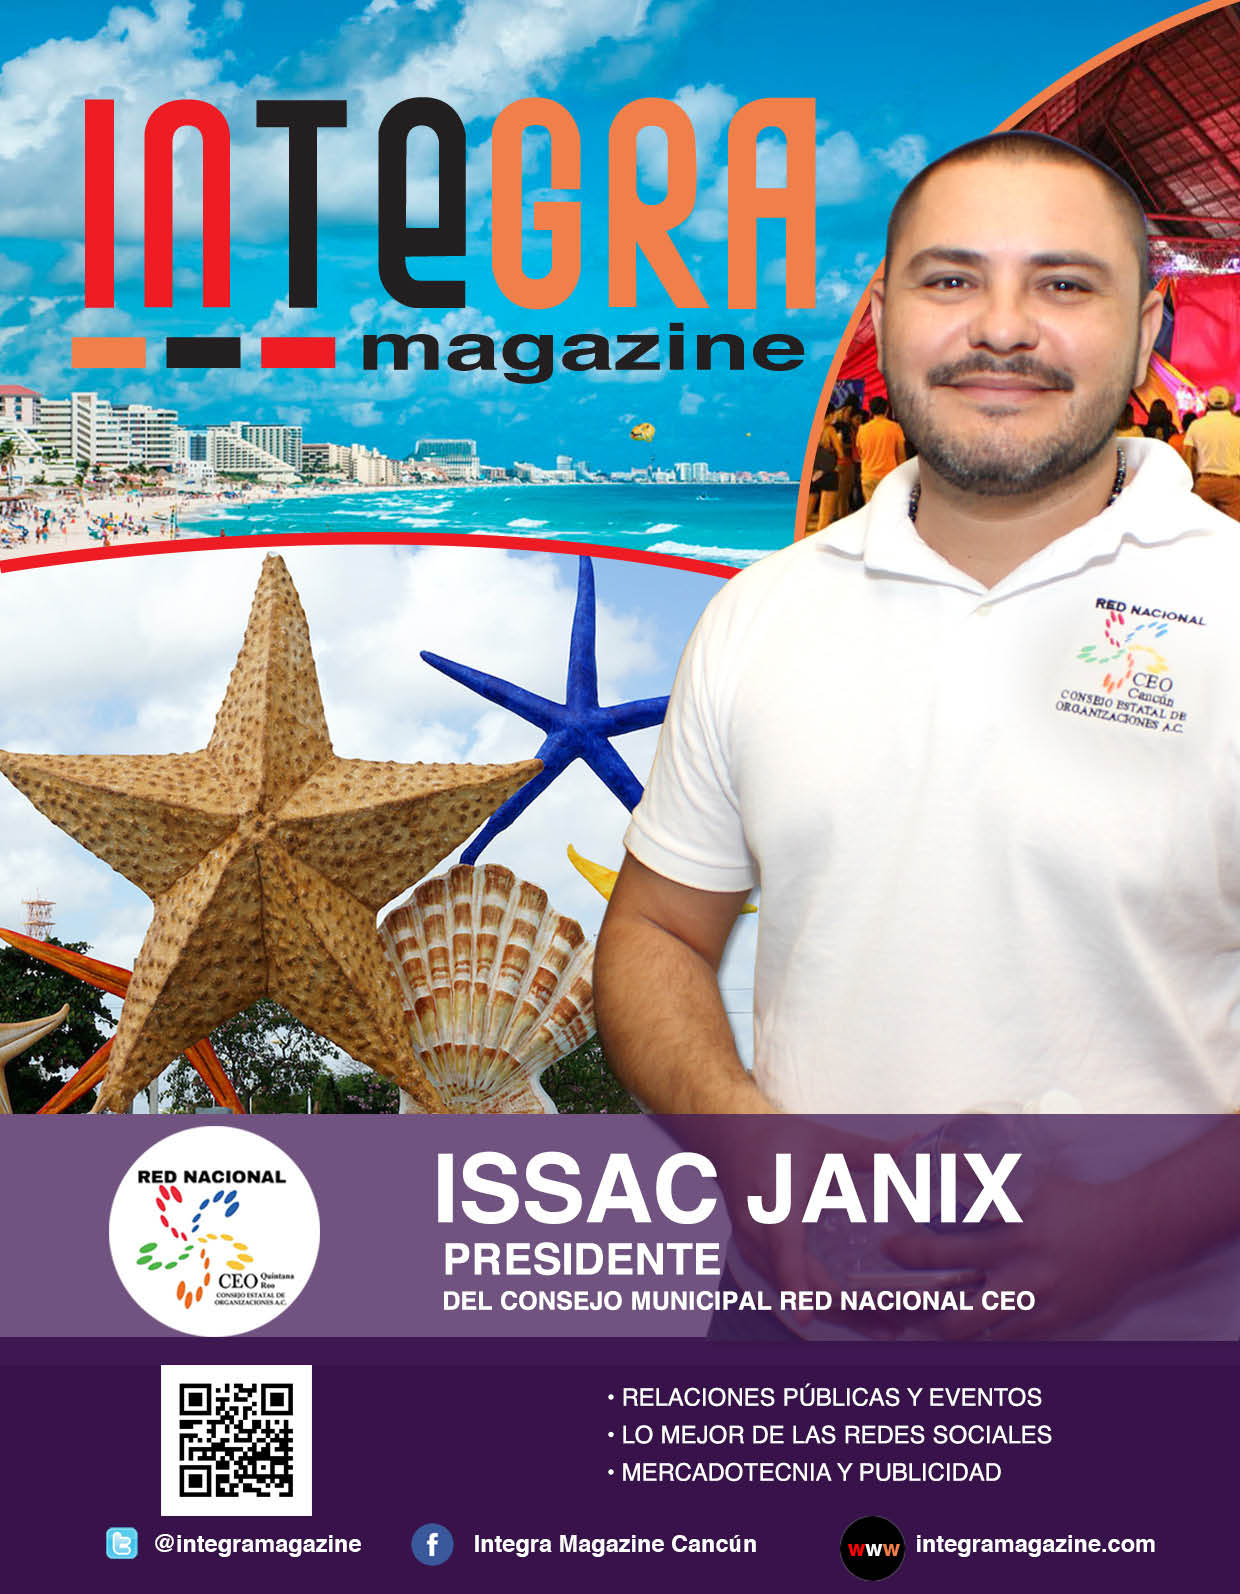 Issac Janix – Presidente del Consejo Municipal Red Nacional CEO